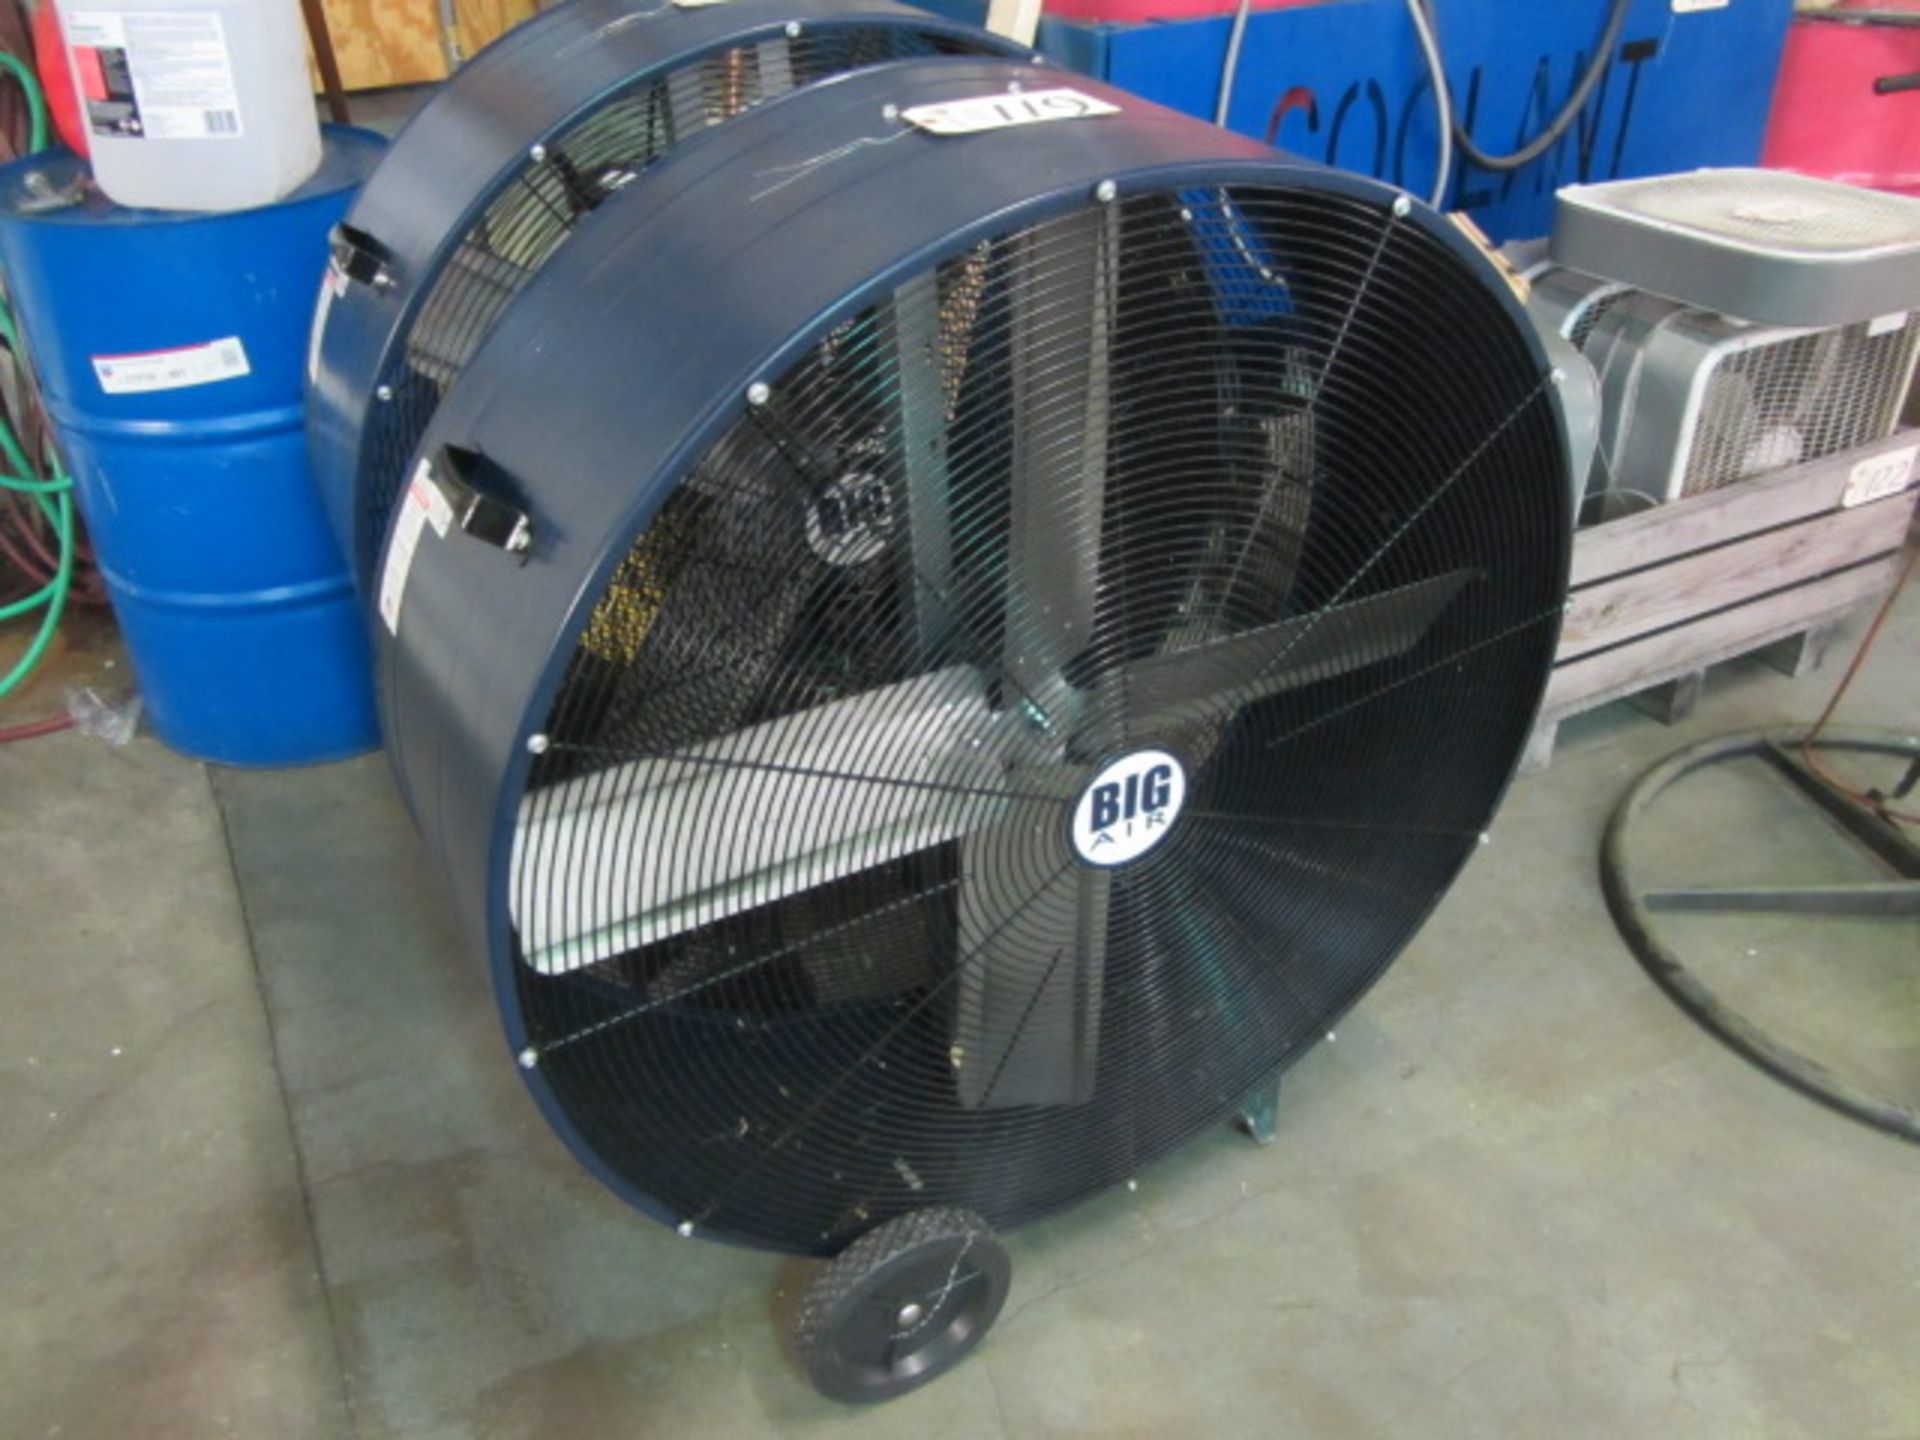 Big Air Portable Fan